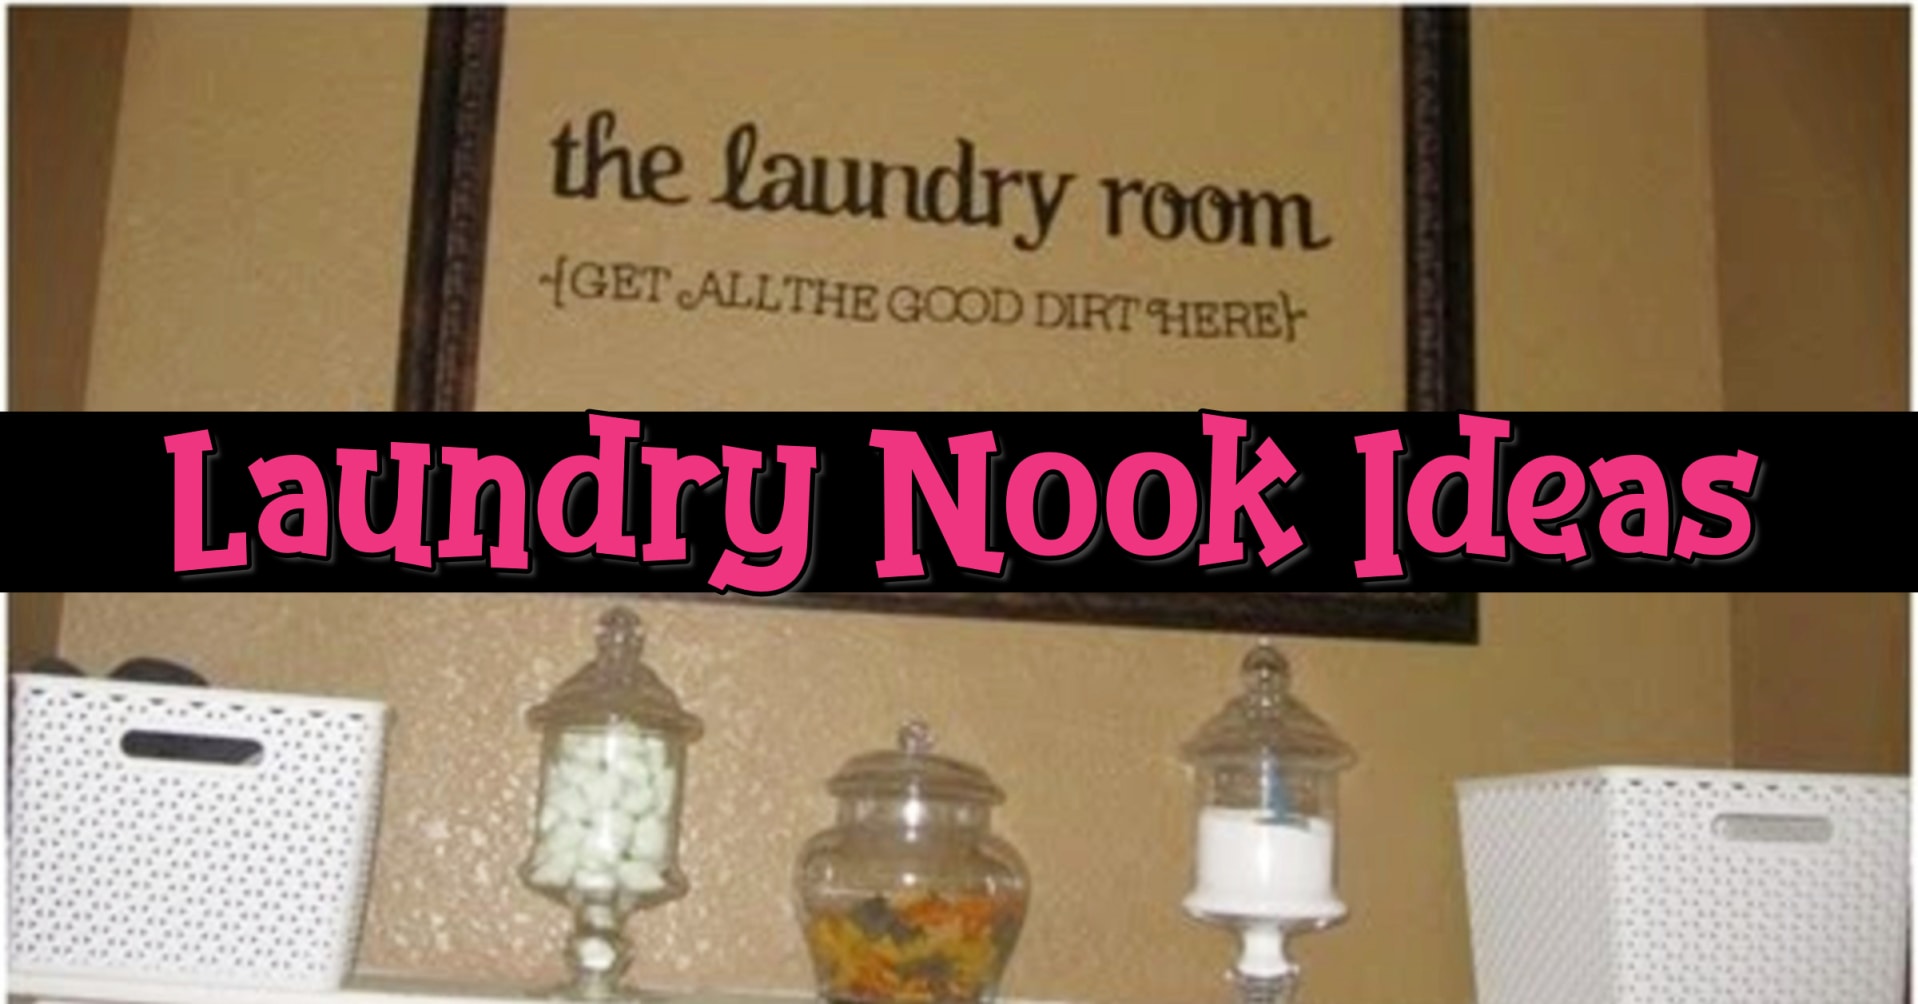 Laundry nook ideas - convert any area into a laundry nook laundry room